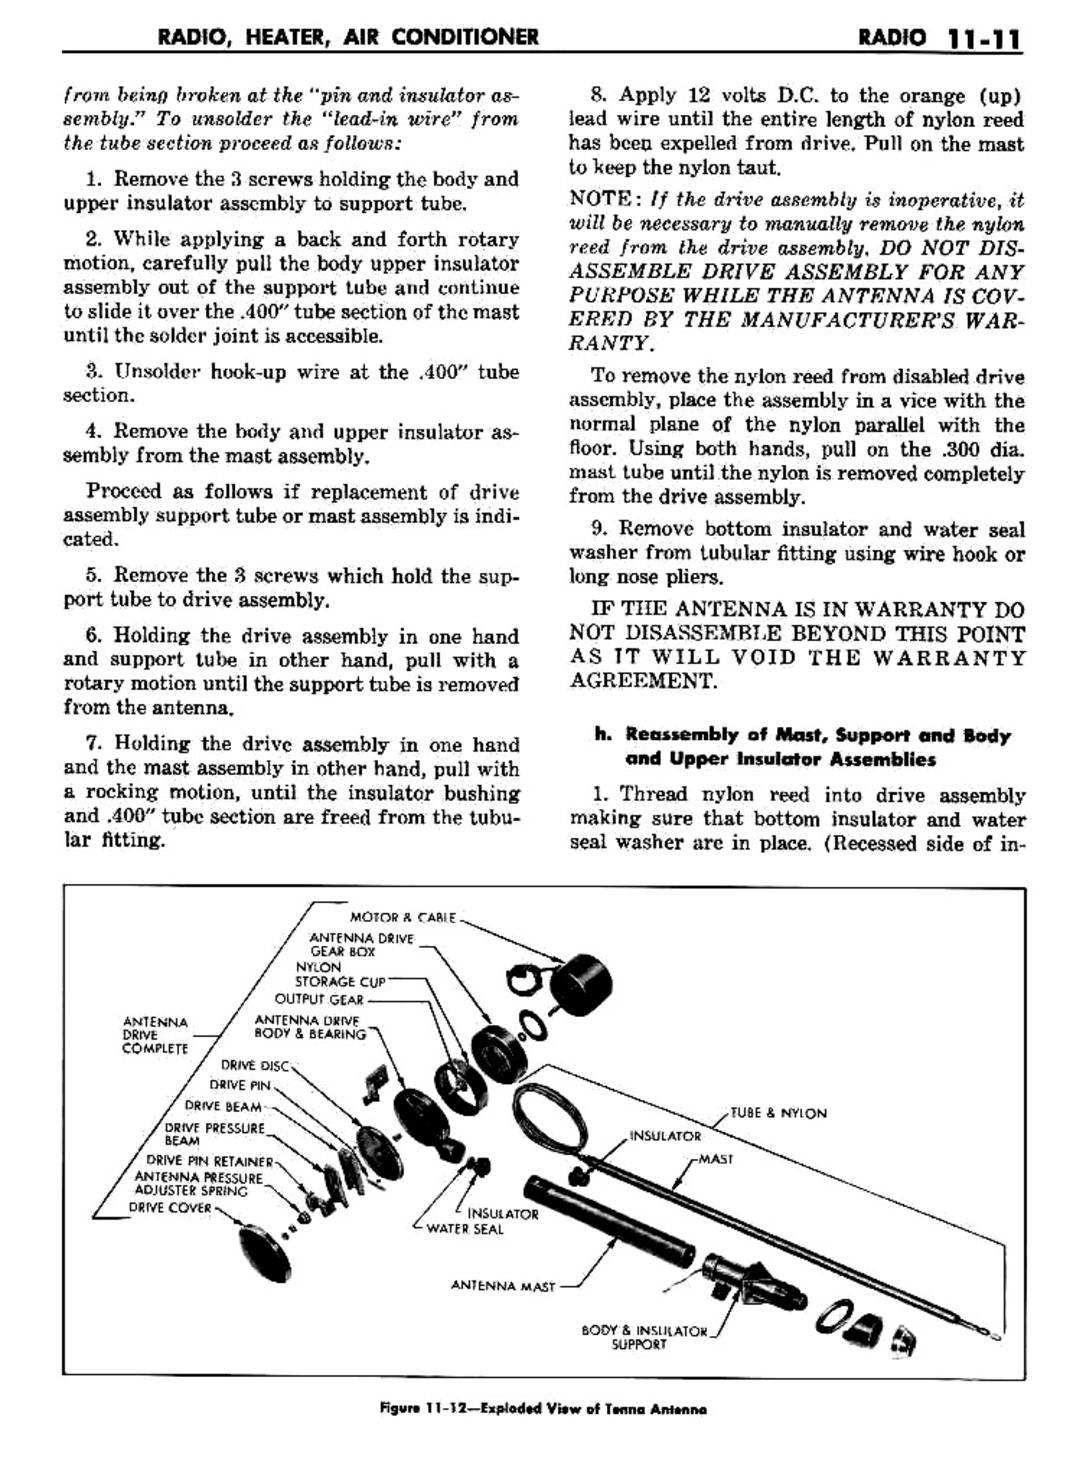 n_12 1960 Buick Shop Manual - Radio-Heater-AC-011-011.jpg